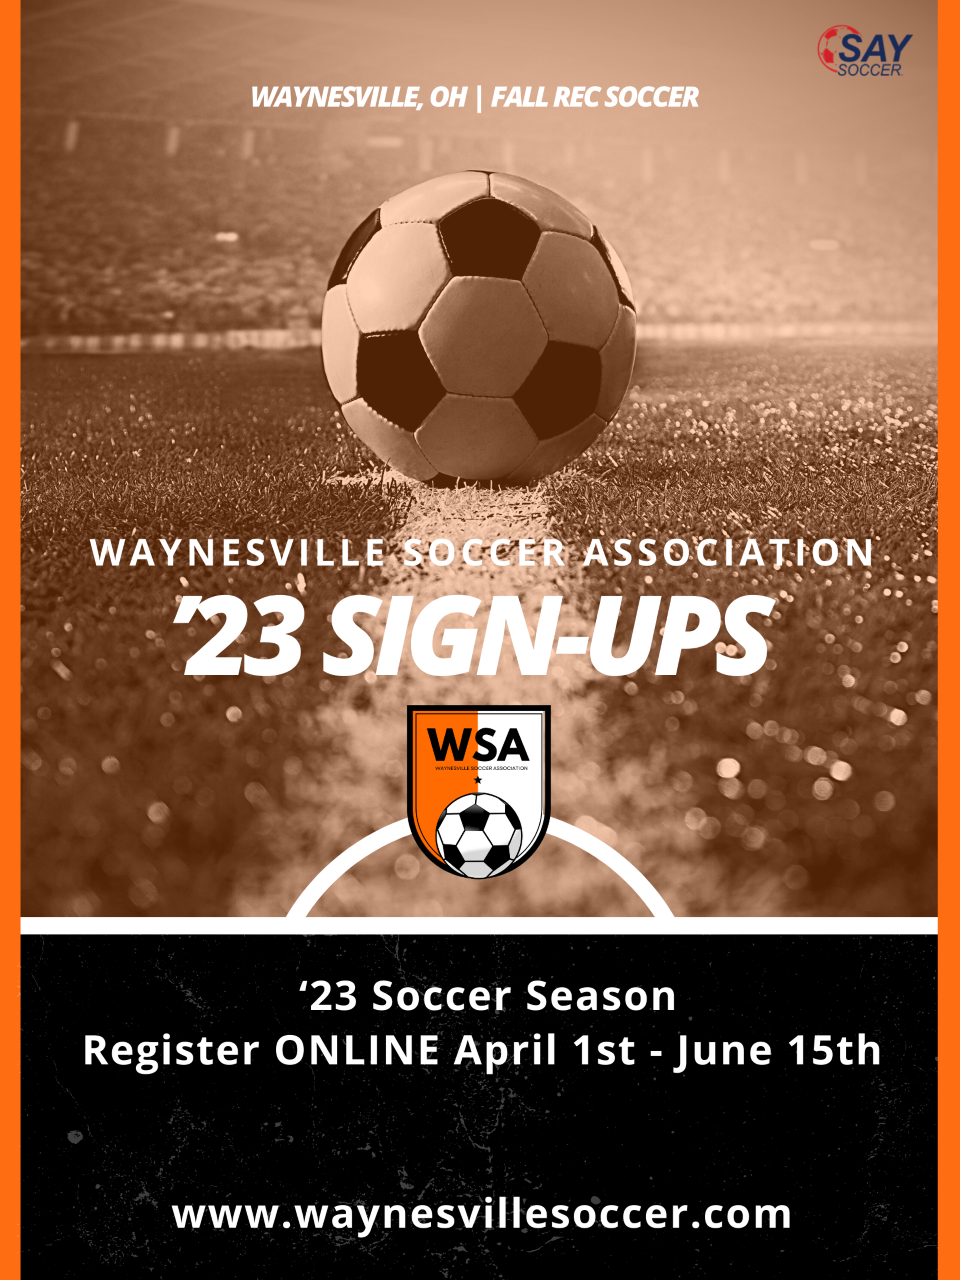 Waynesville Soccer Association flyer